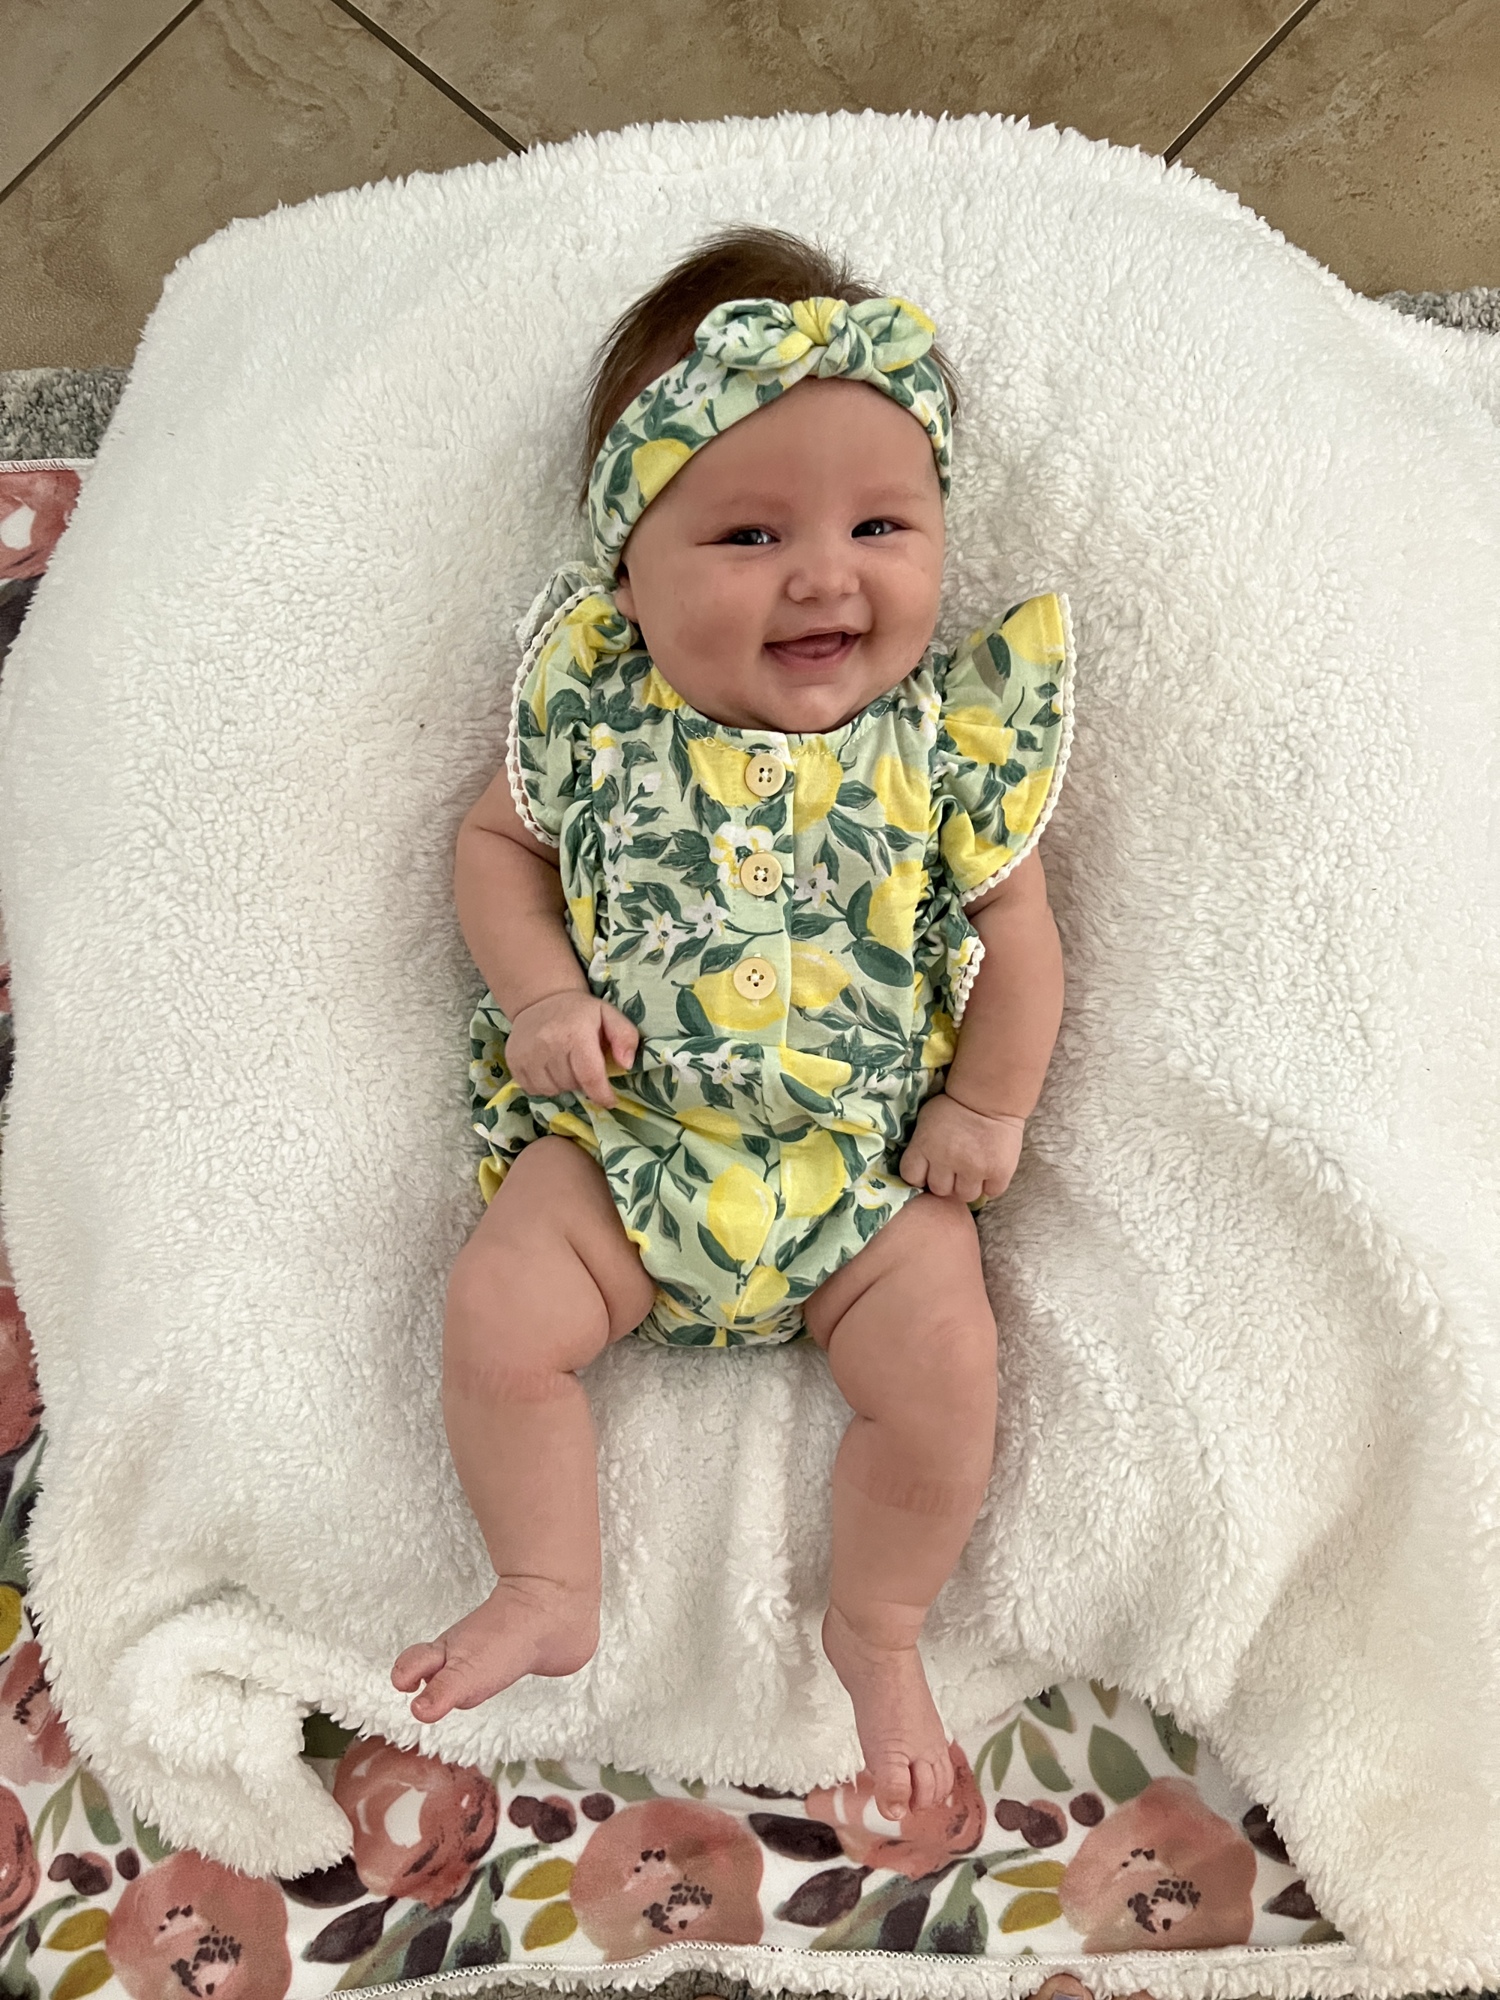 Natalie Poma’s daughter, Elsie, turned 2 months old May 10.